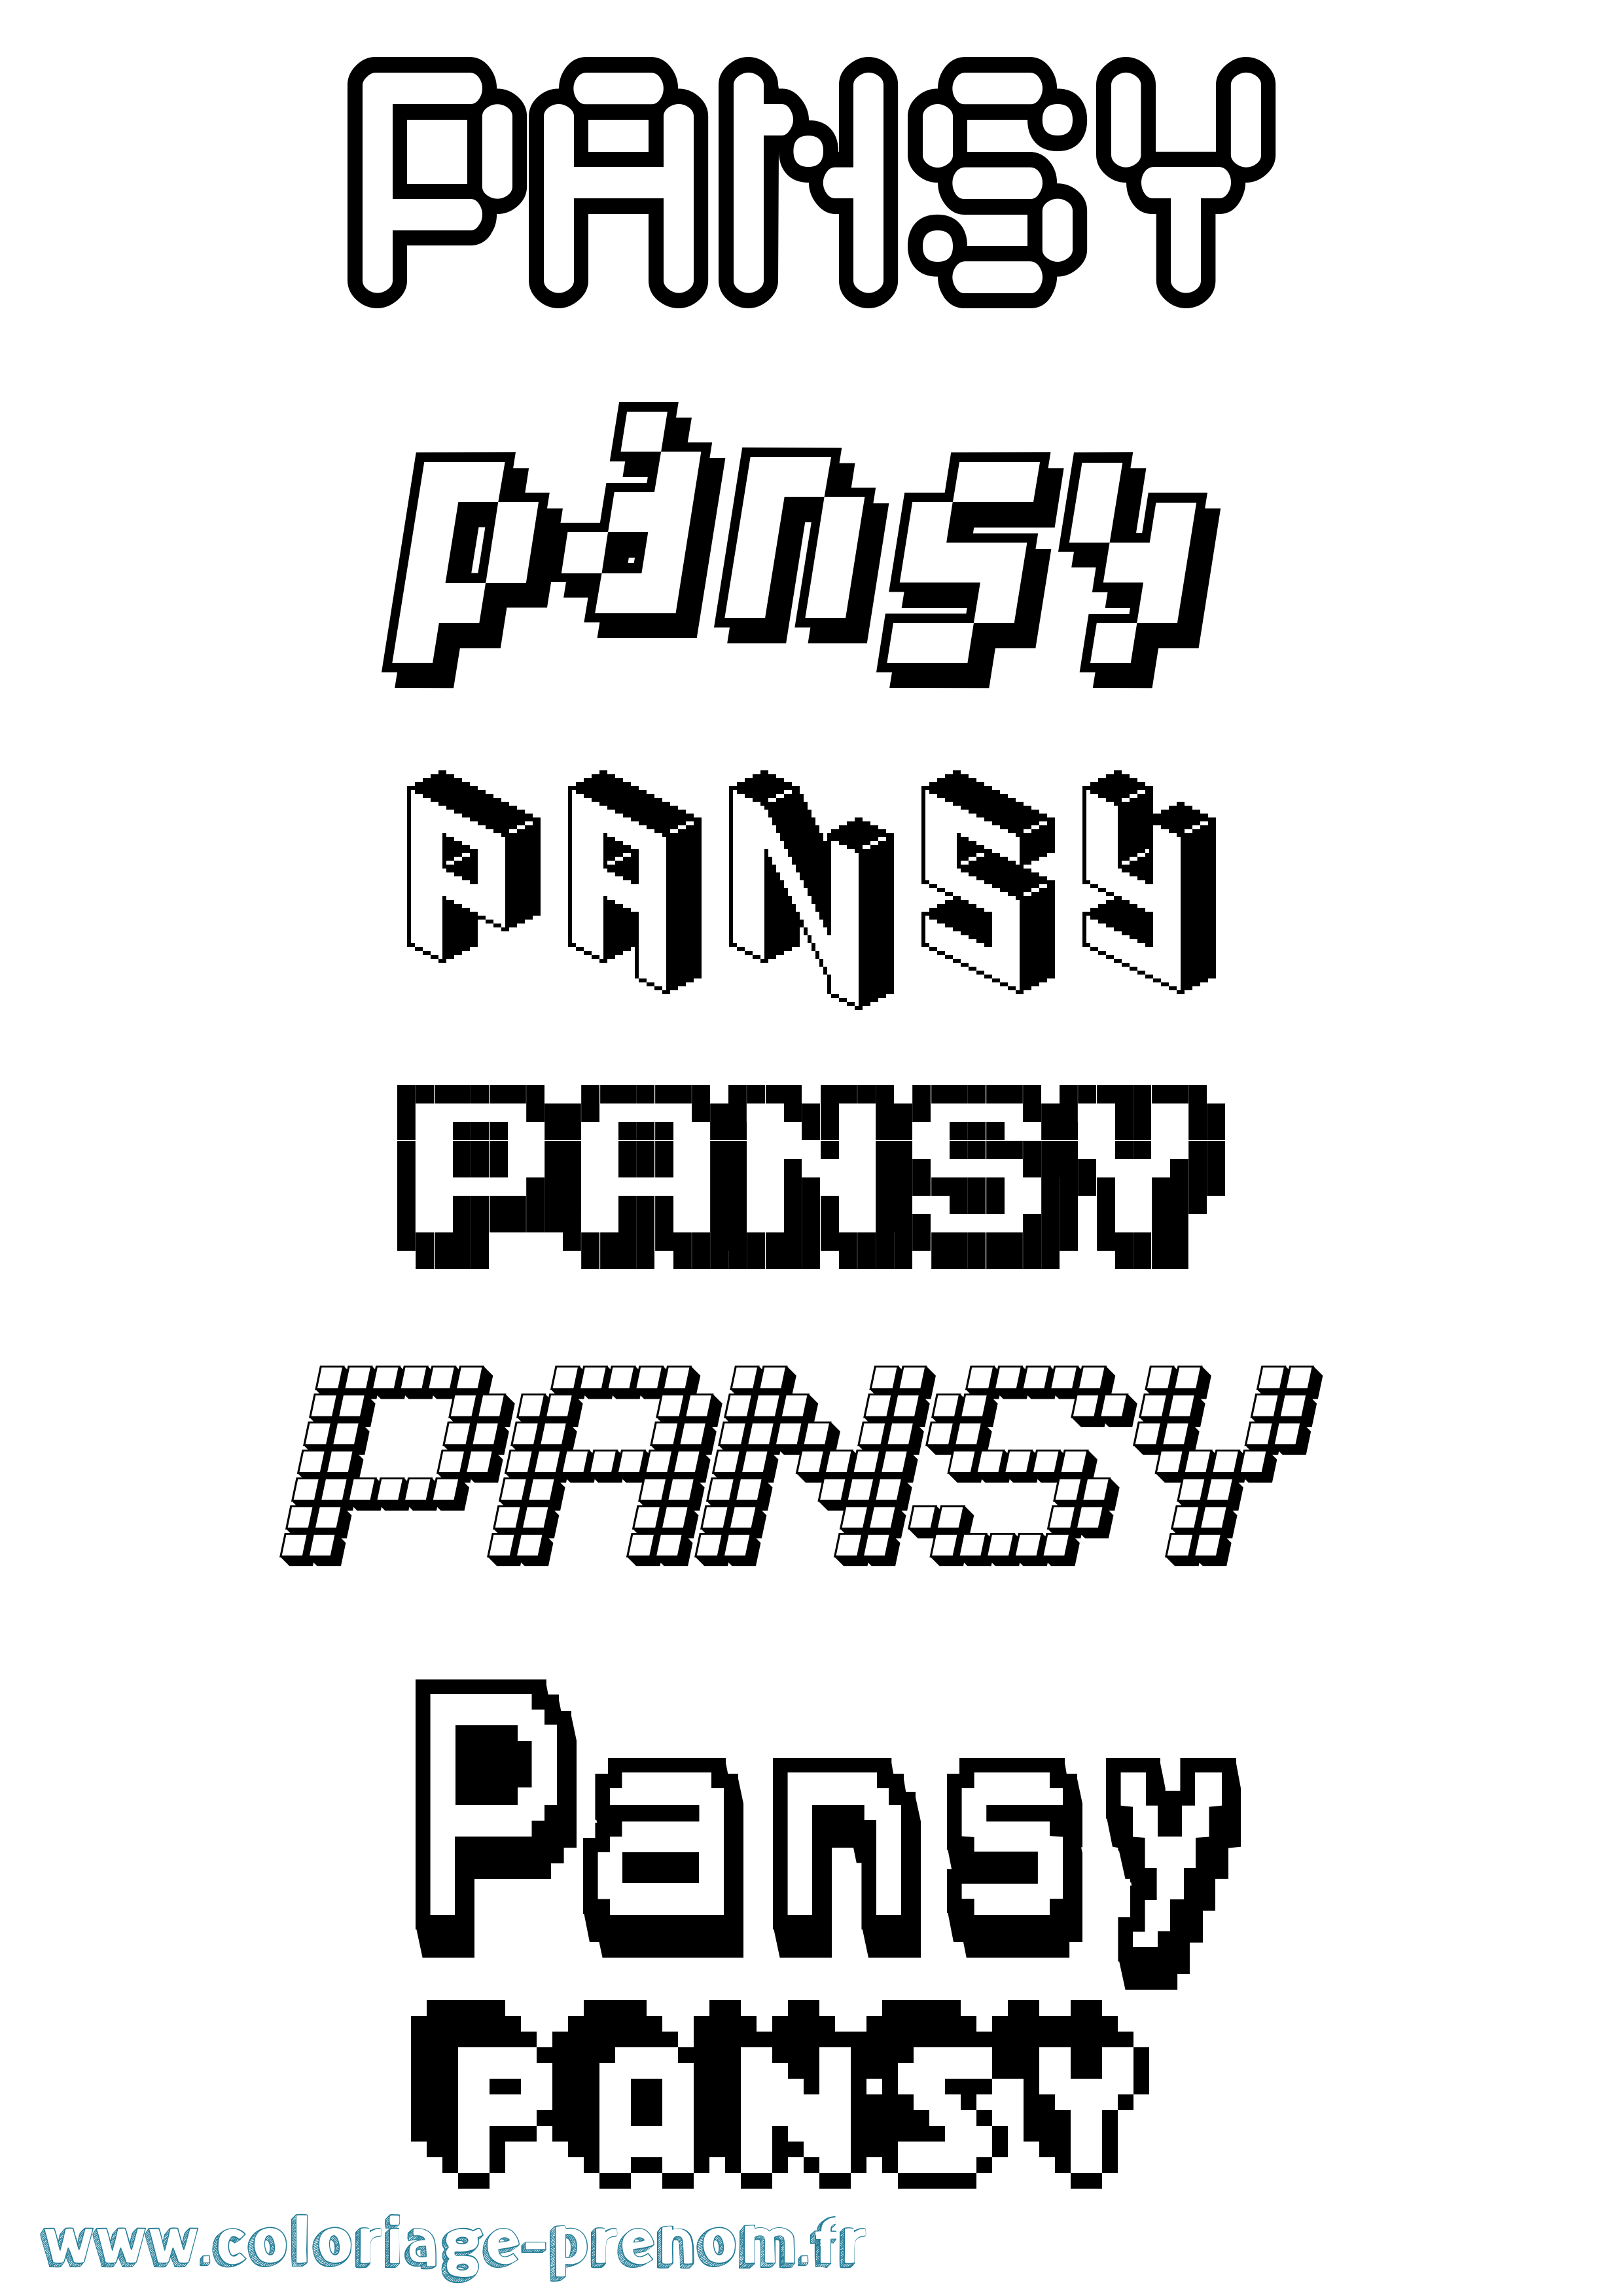 Coloriage prénom Pansy Pixel